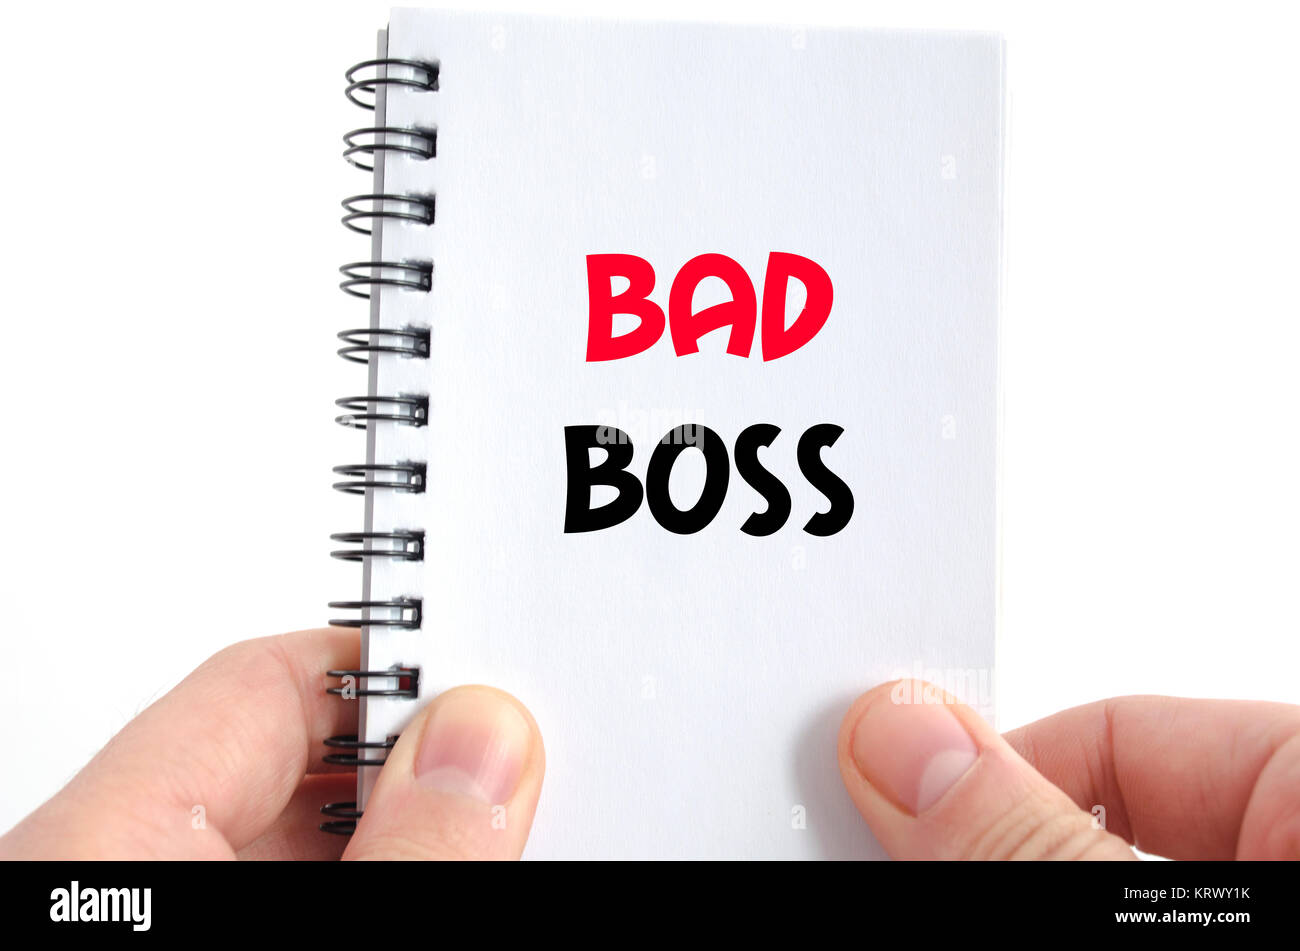 Bad boss text concept Stock Photo